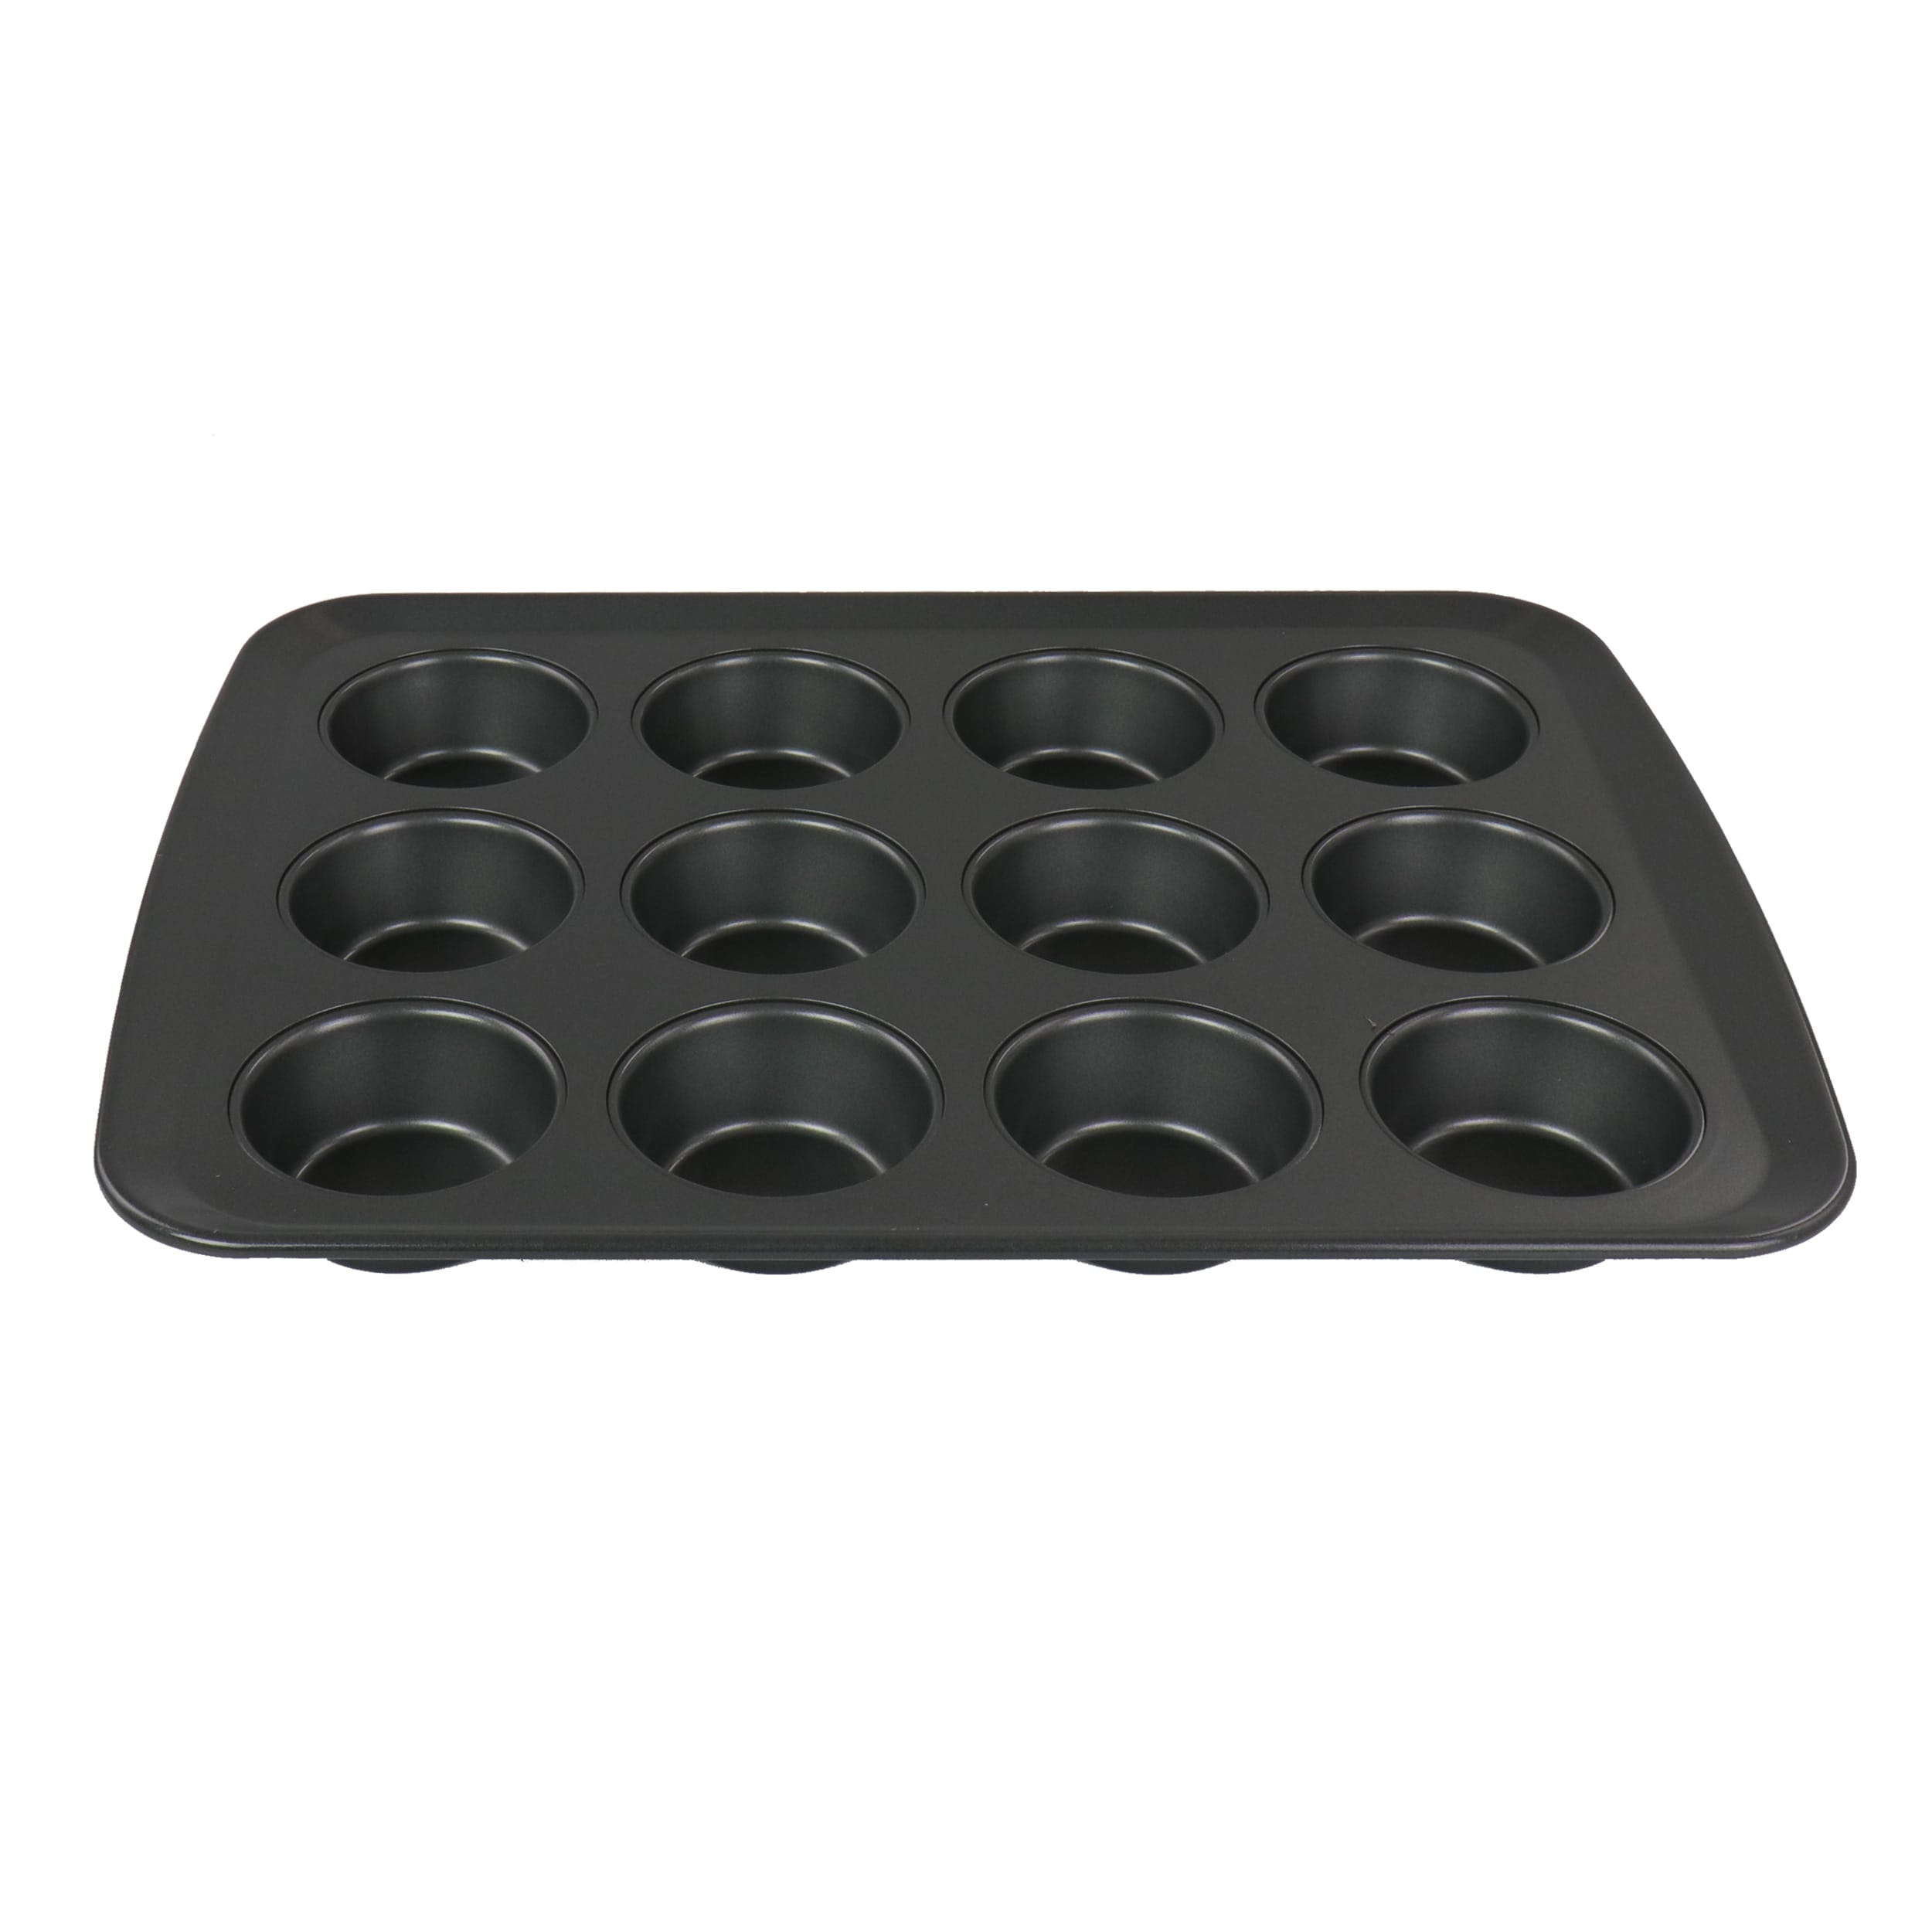 Martha Stewart 12-Cup Nonstick Carbon Steel Muffin Pan 